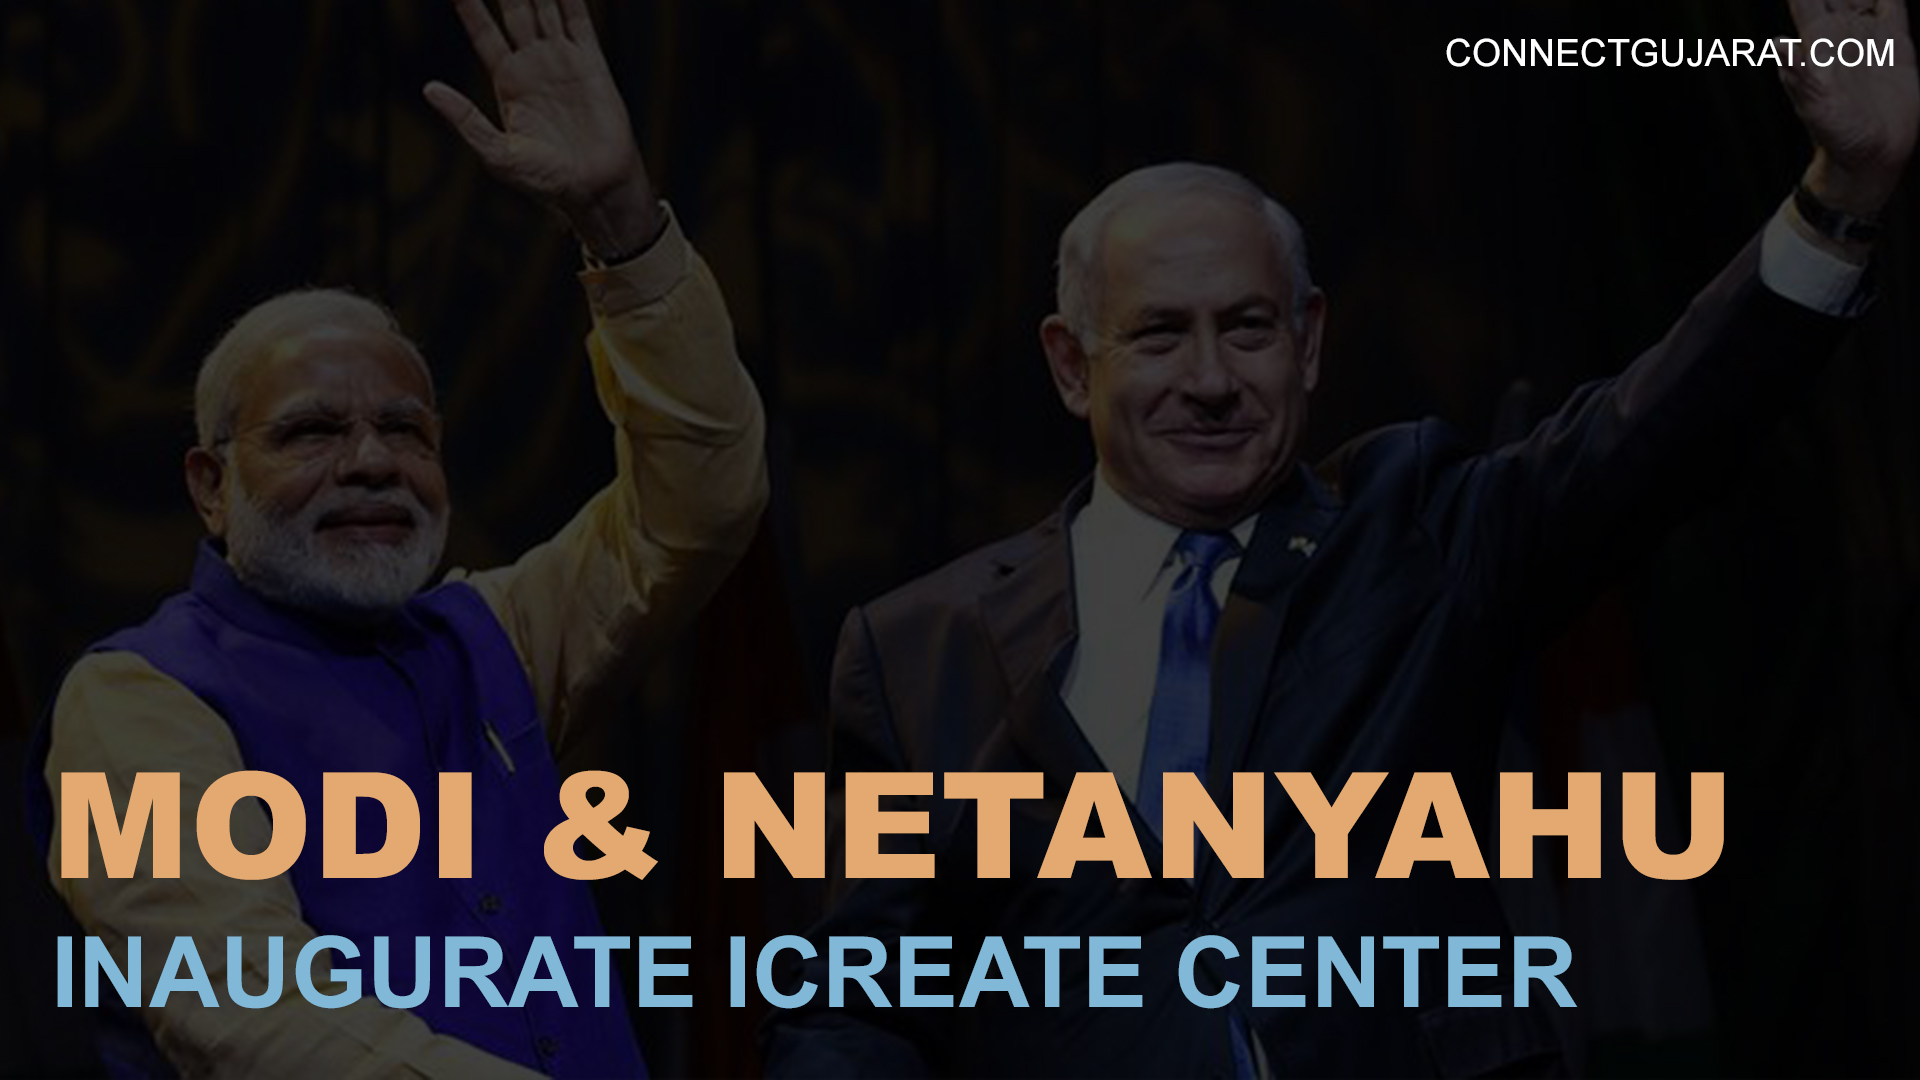 Modi, Netanyahu inaugurate iCreatecenter